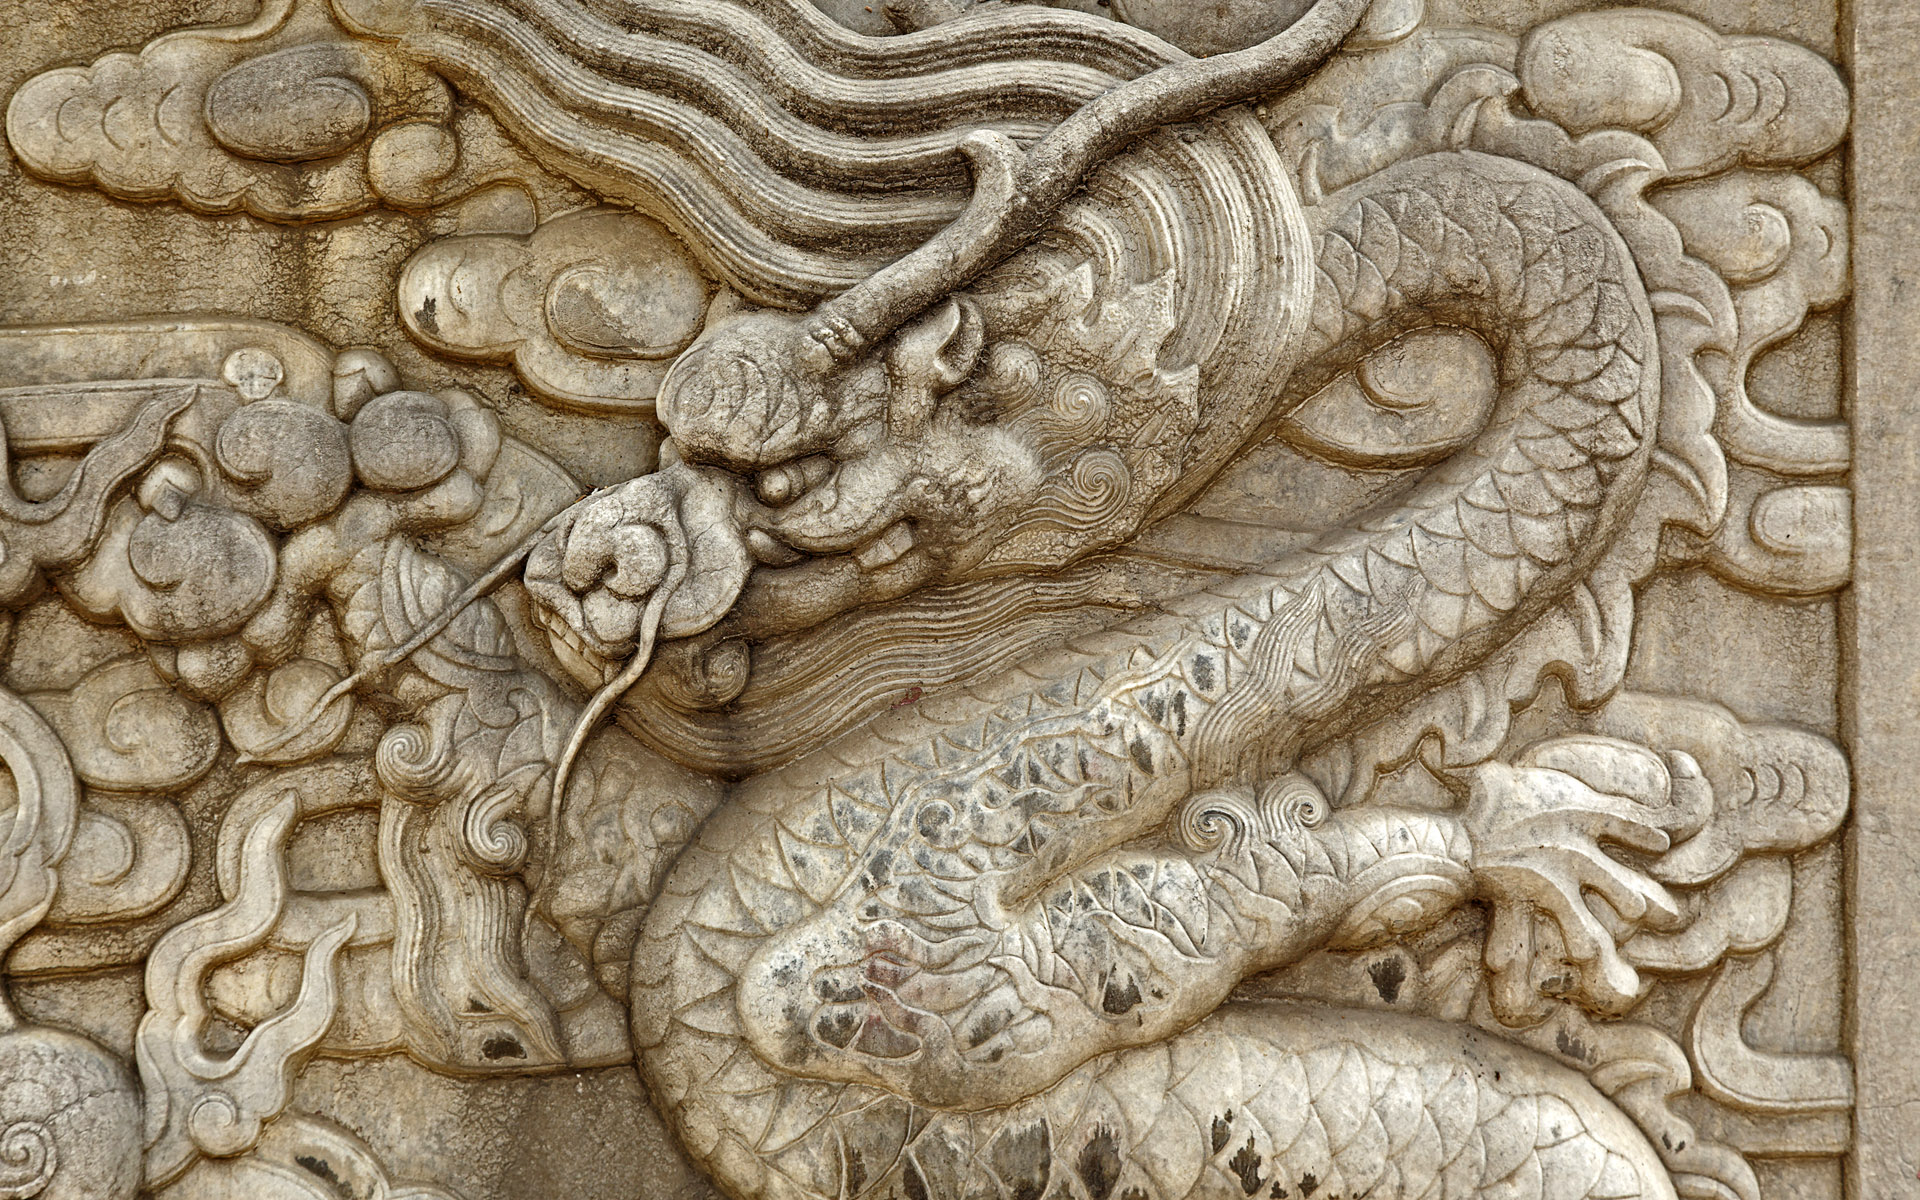 Man Made Dragon HD Wallpaper | Background Image